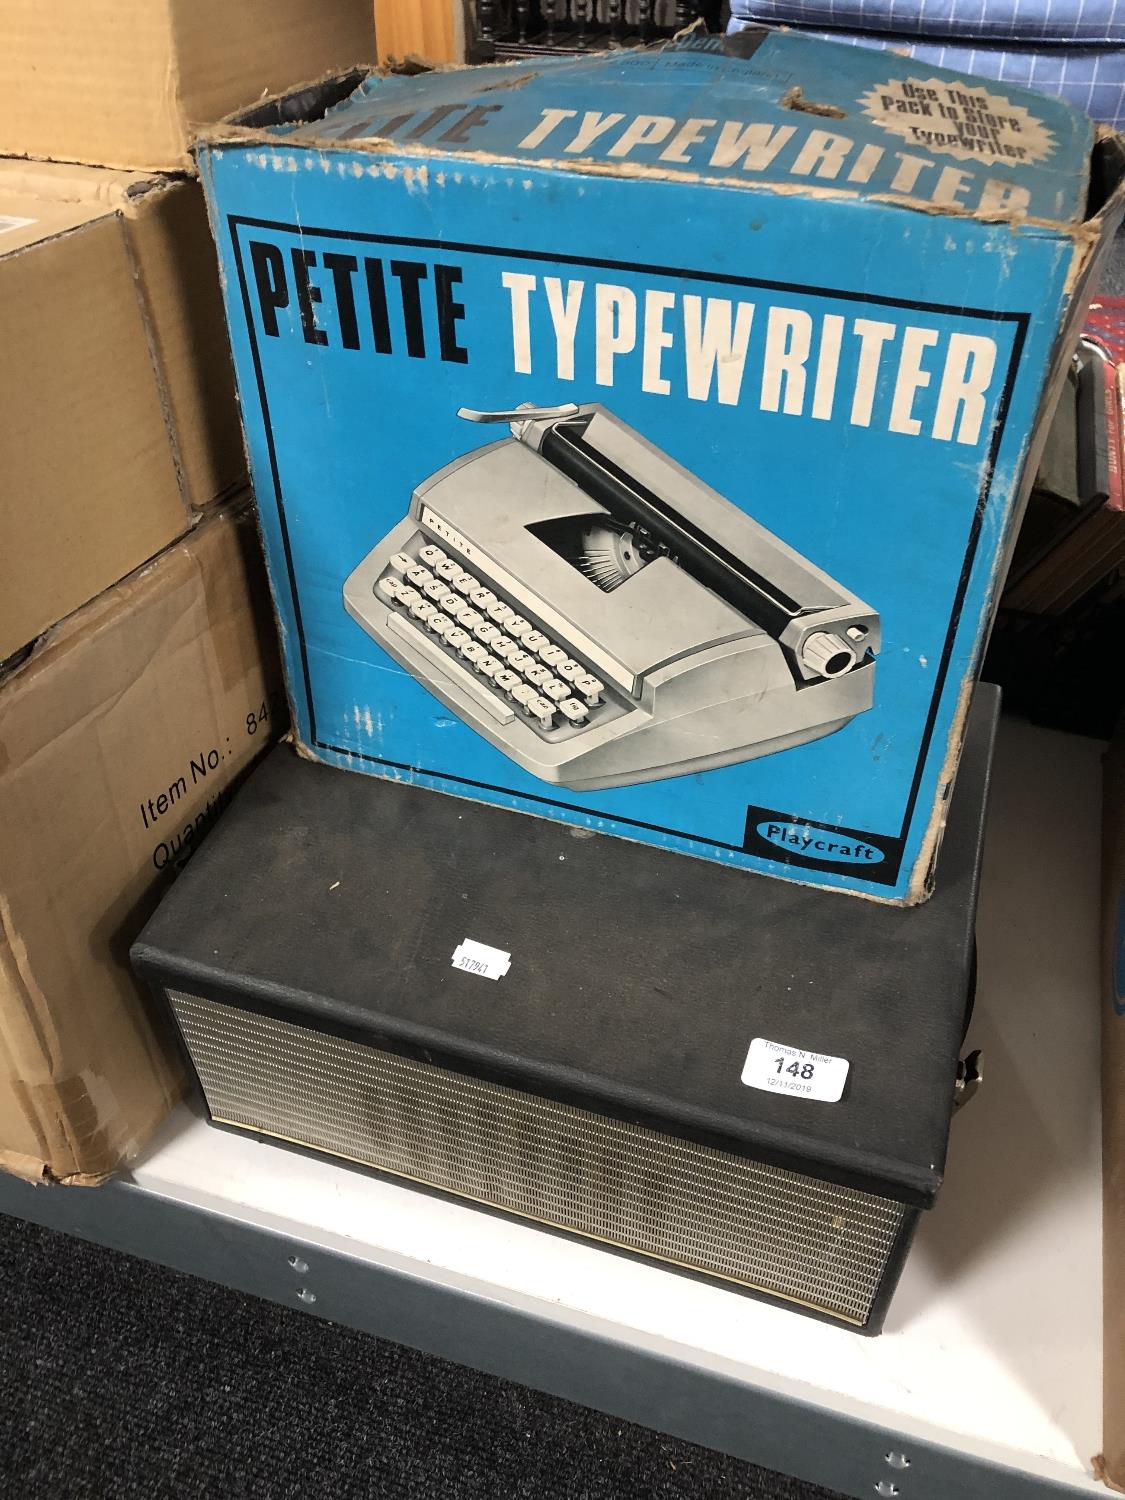 A cased Petite typewriter and a vintage Ferguson reel to reel